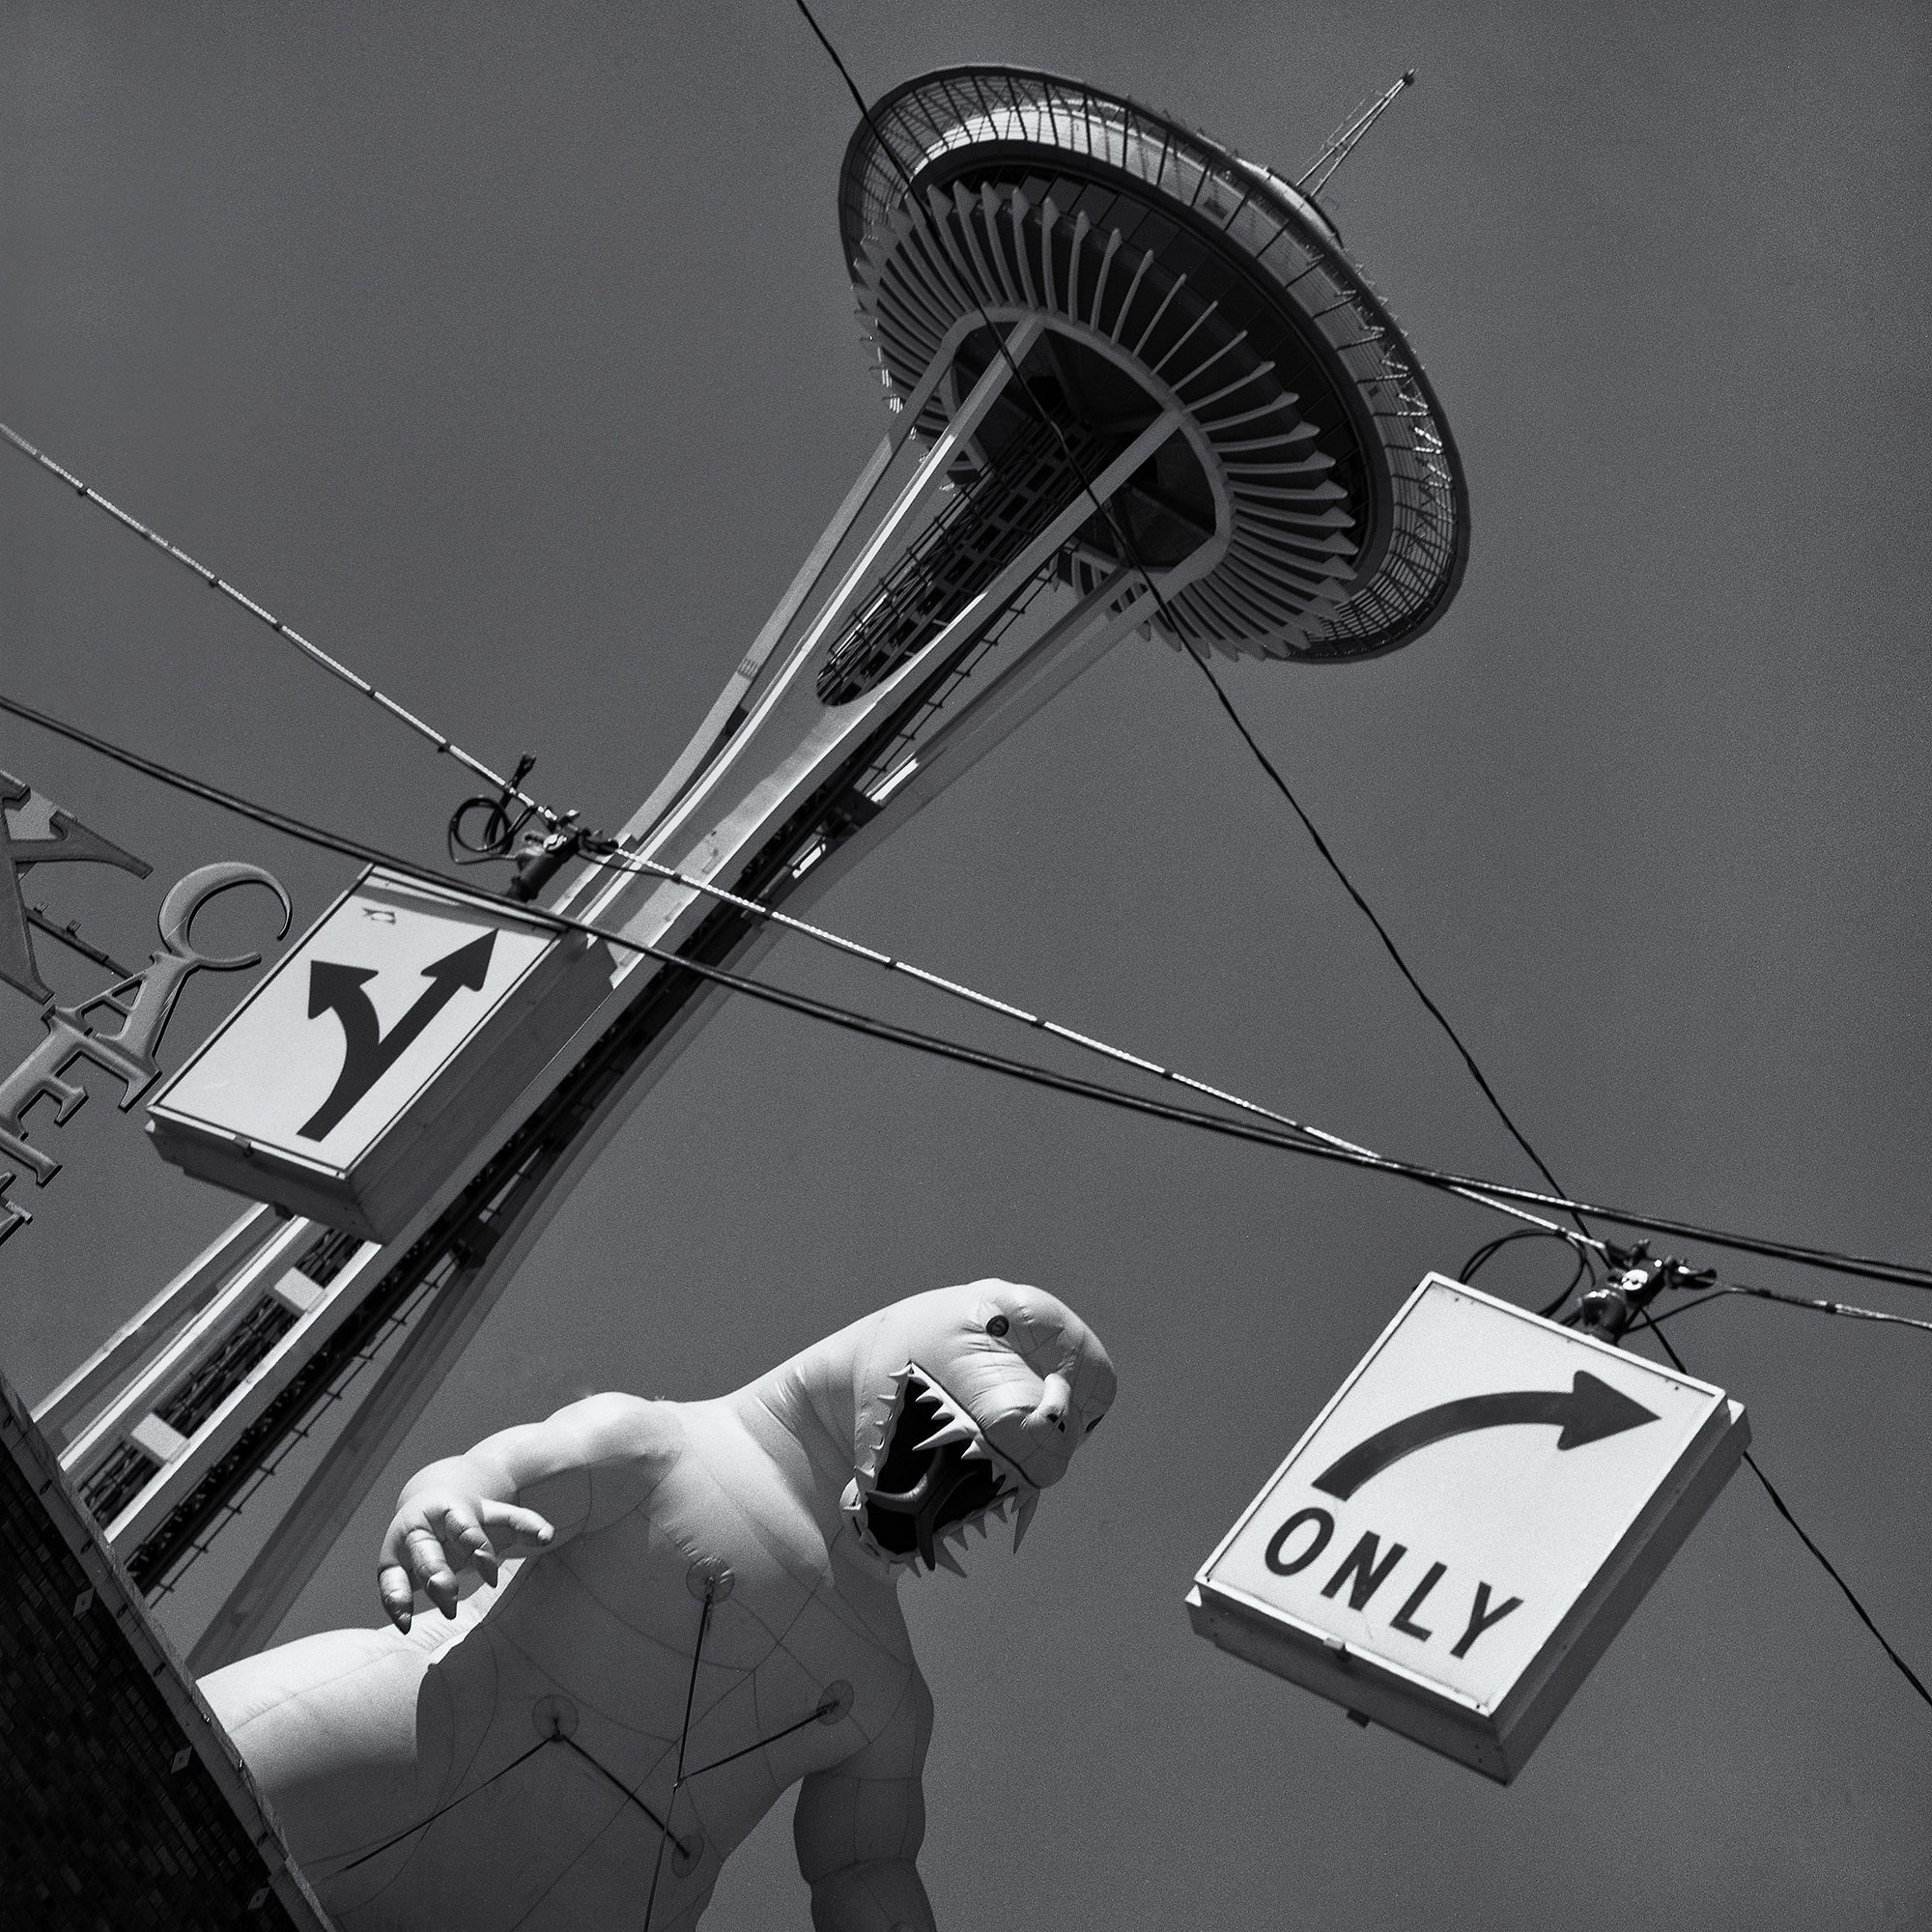  Godzilla and the Space Needle, Seattle 